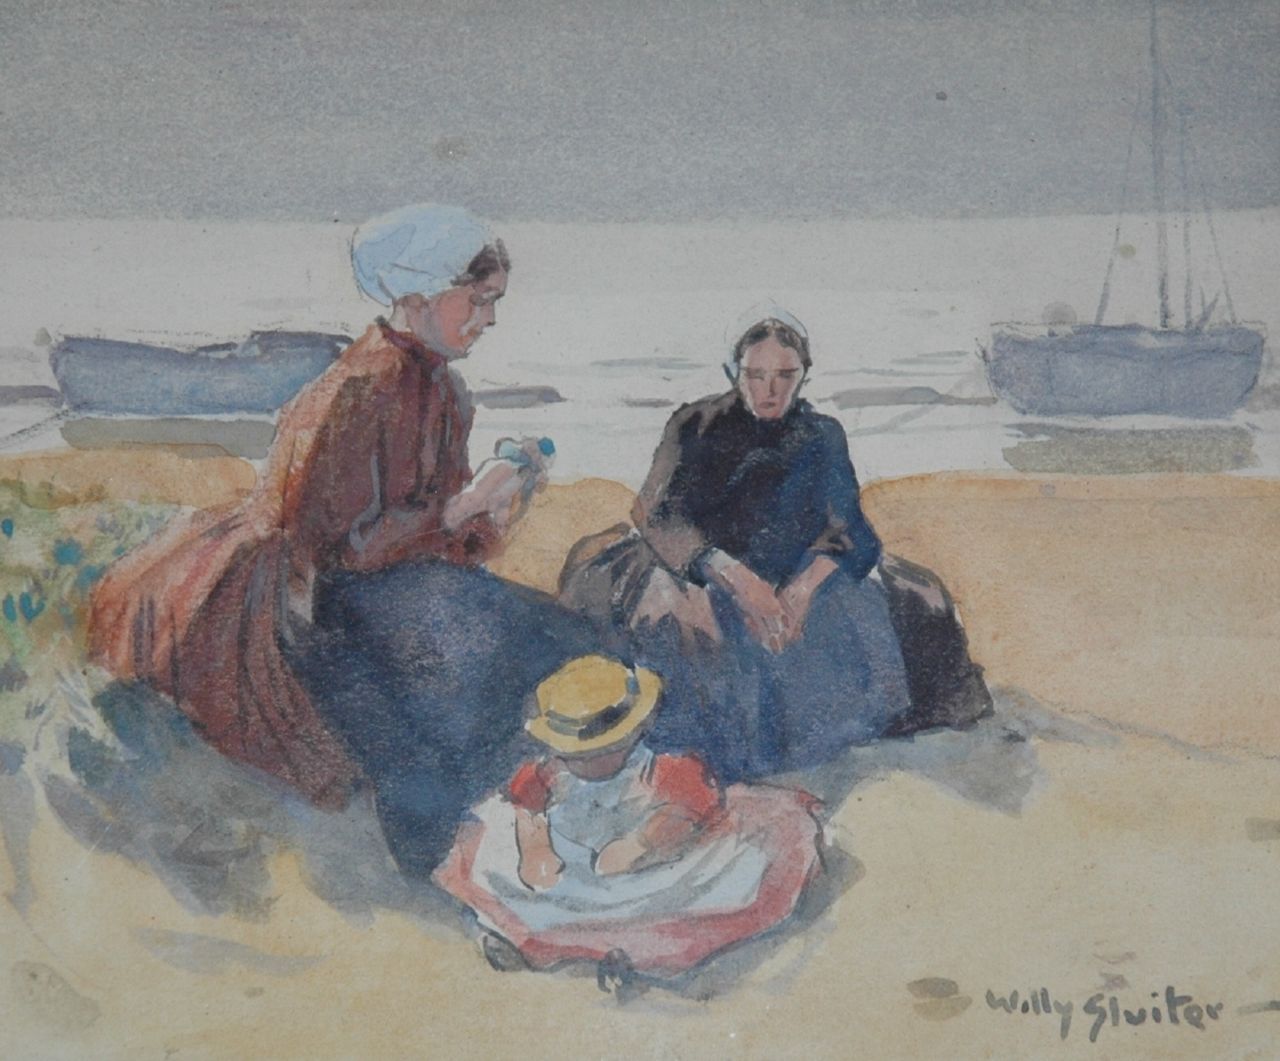 Sluiter J.W.  | Jan Willem 'Willy' Sluiter, Fisherwomen in the dunes, Aquarell auf Papier 11,0 x 13,5 cm, signed l.r.